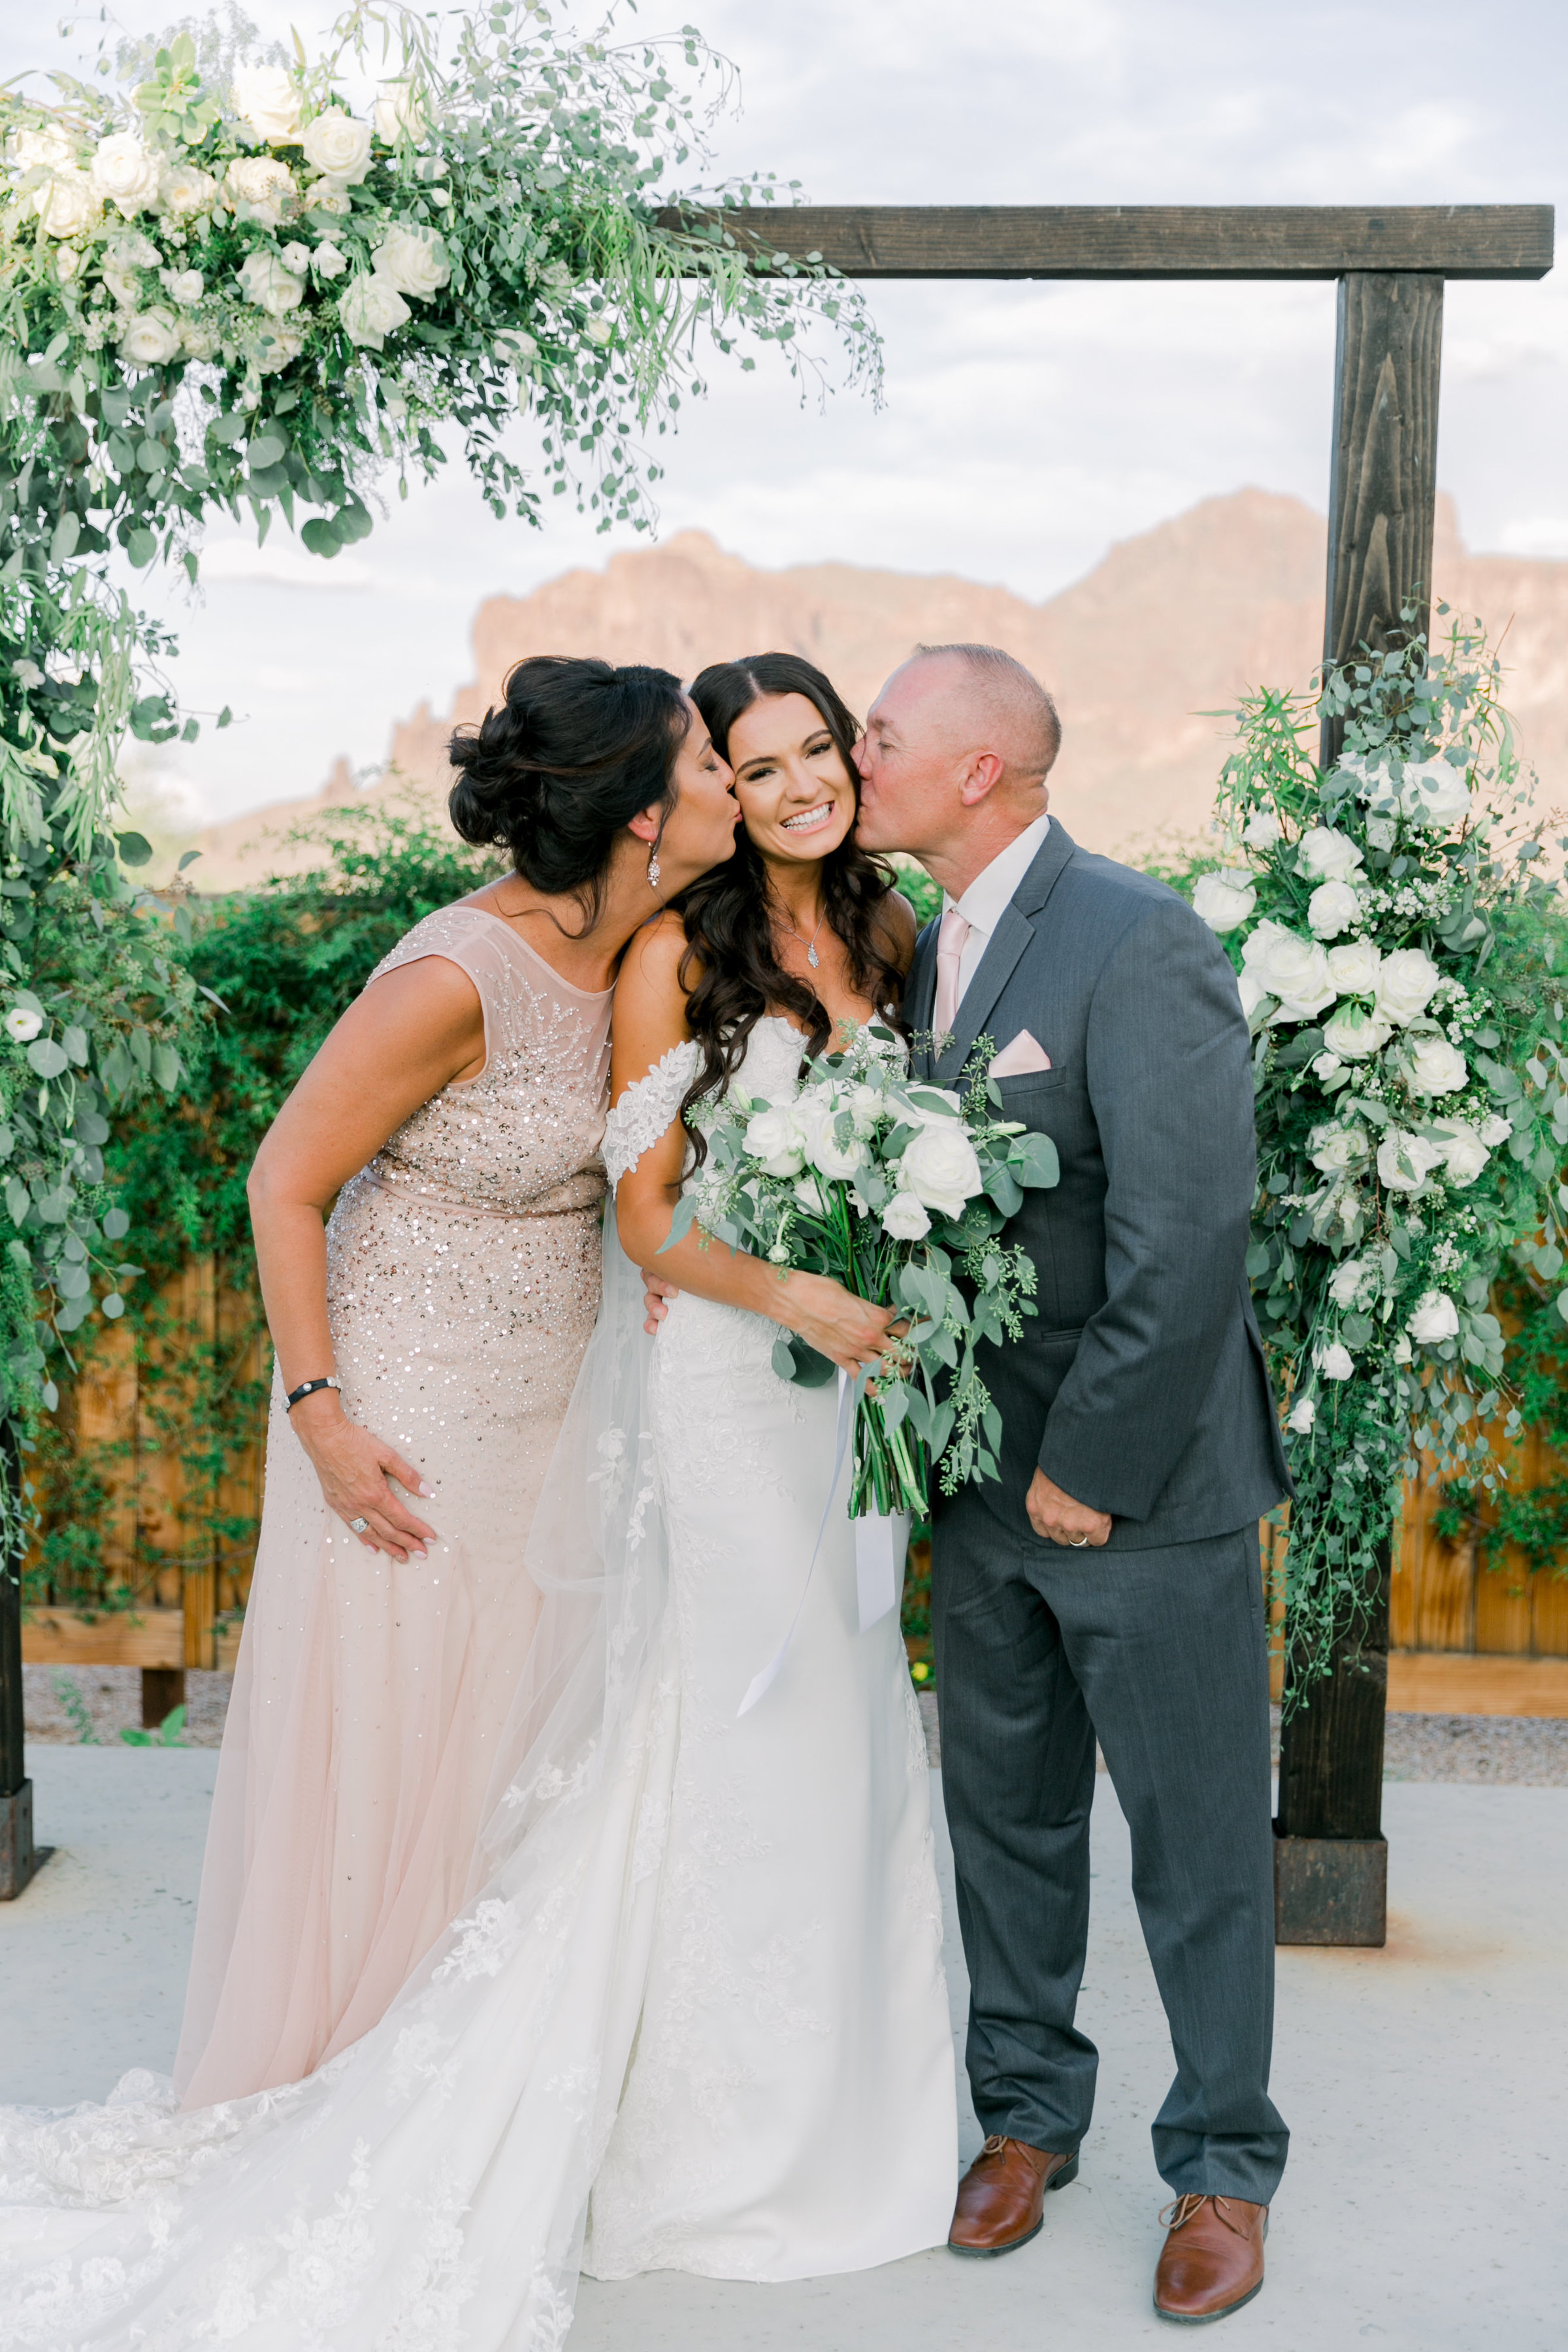 Karlie Colleen Photography - The Paseo Arizona Desert Wedding - Jackie & Ryan-113